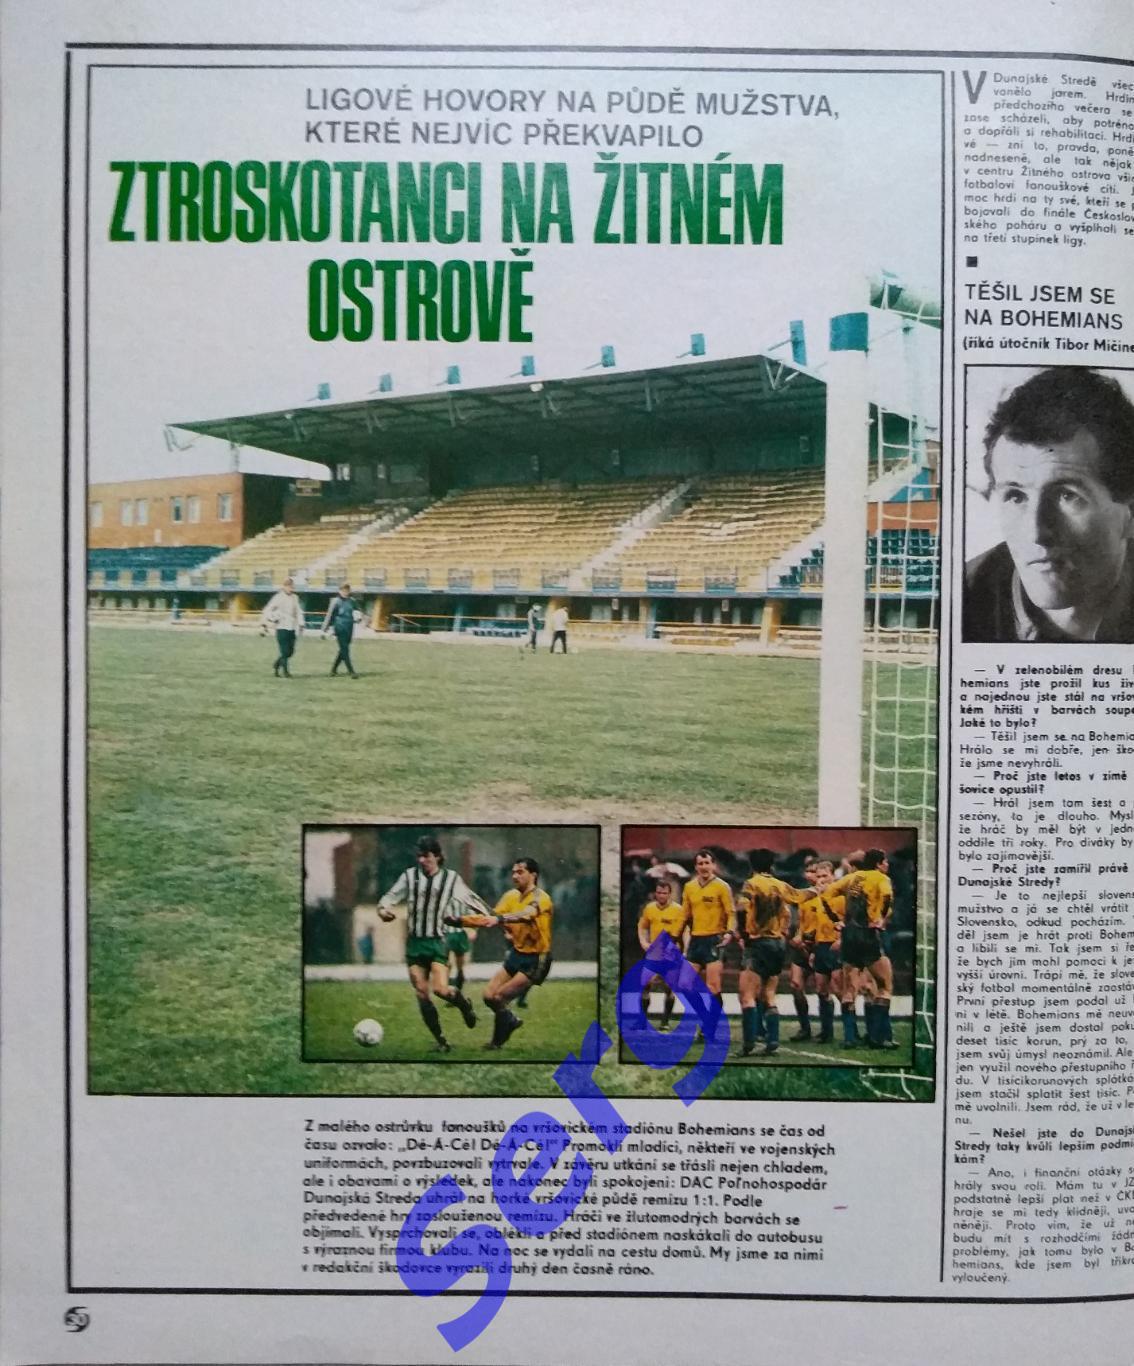 Журнал Стадион (Stadion) №22 1987 год 3